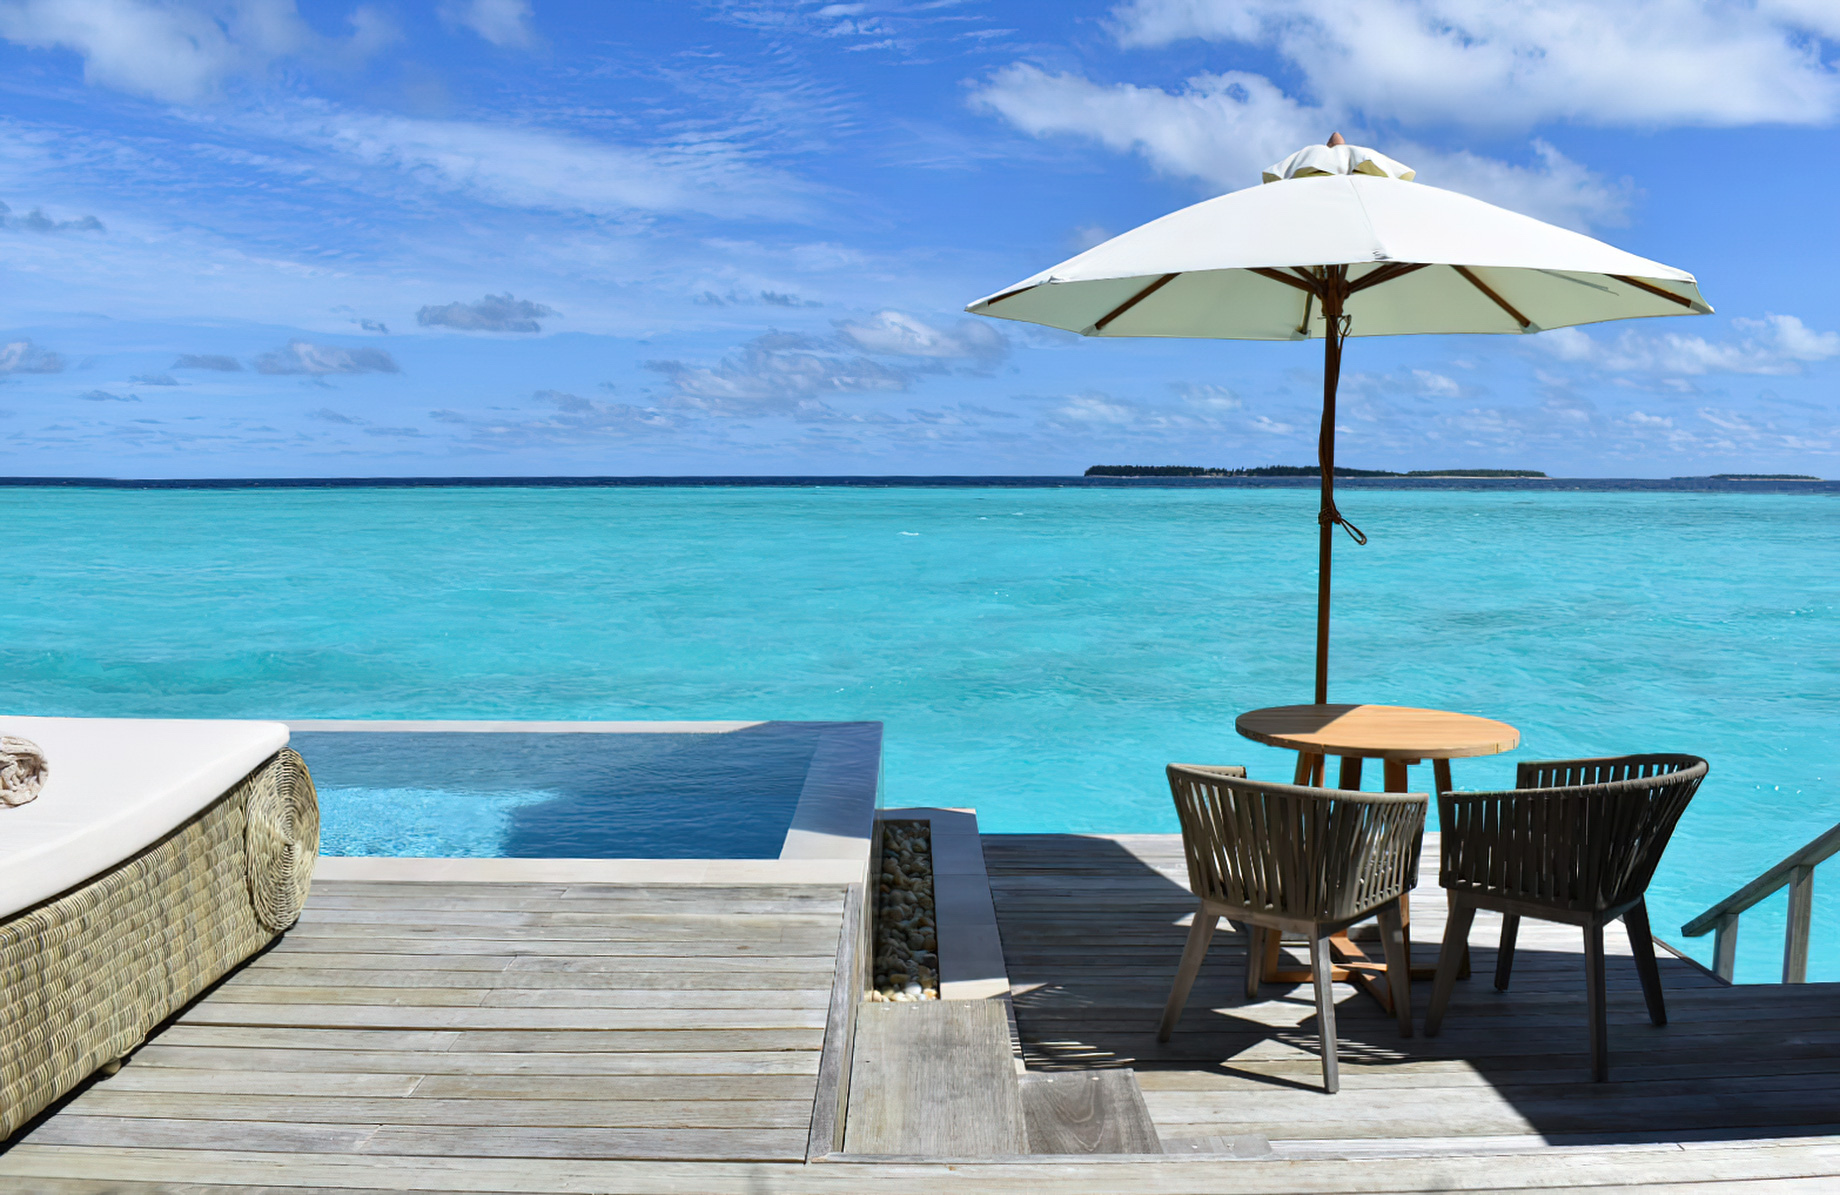 Baglioni Resort Maldives – Maagau Island, Rinbudhoo, Maldives – Overwater Villa Pool Deck